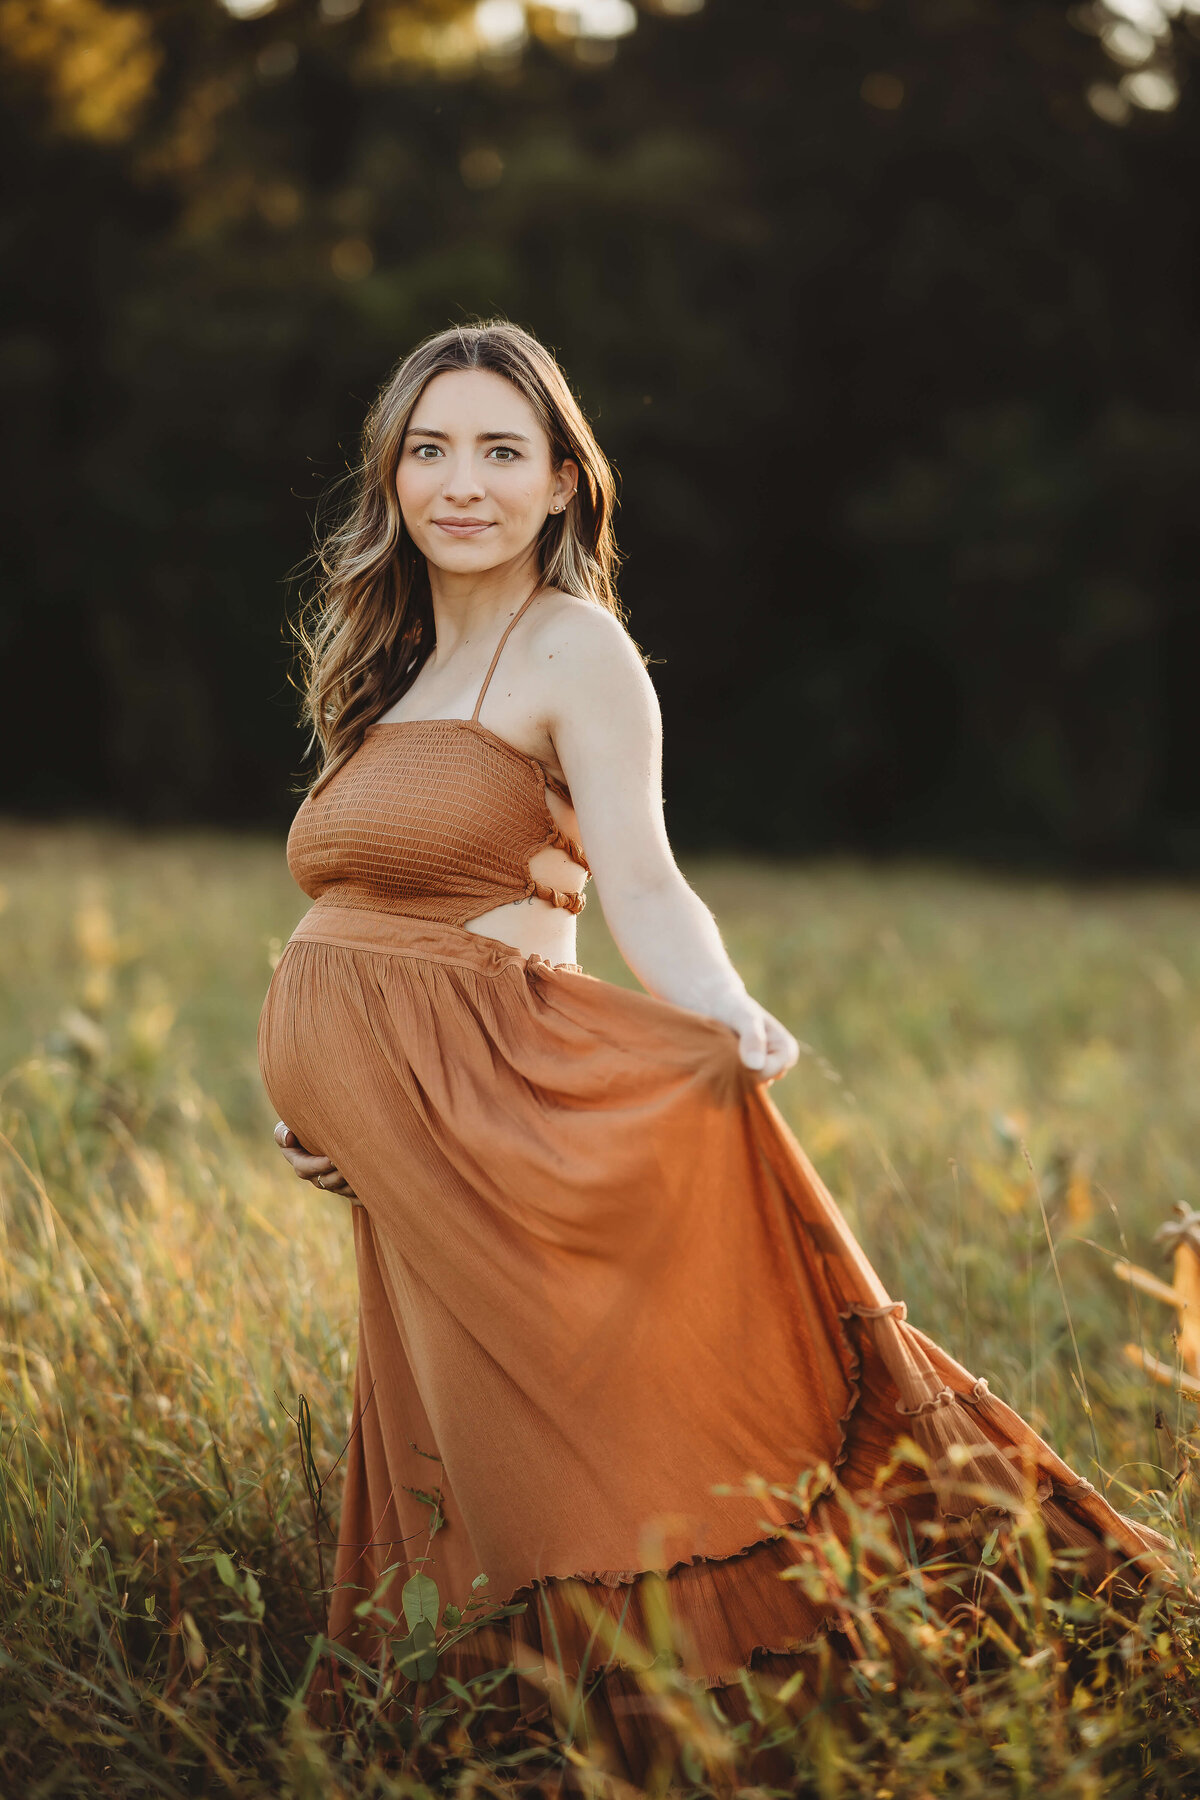 Katy_harrisburg-maternity-photography-outdoor-13